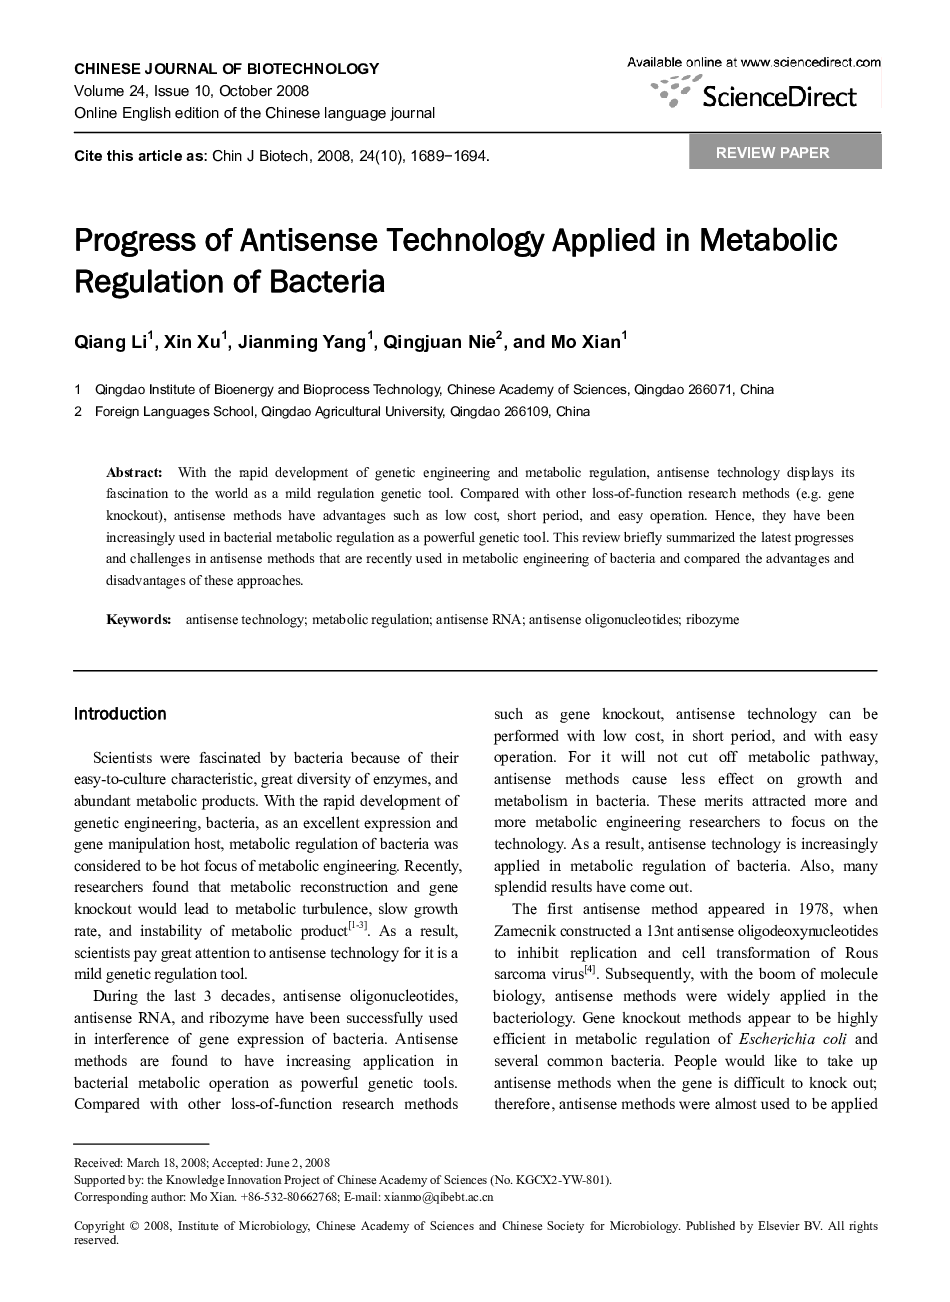 Progress of Antisense Technology Applied in Metabolic Regulation of Bacteria